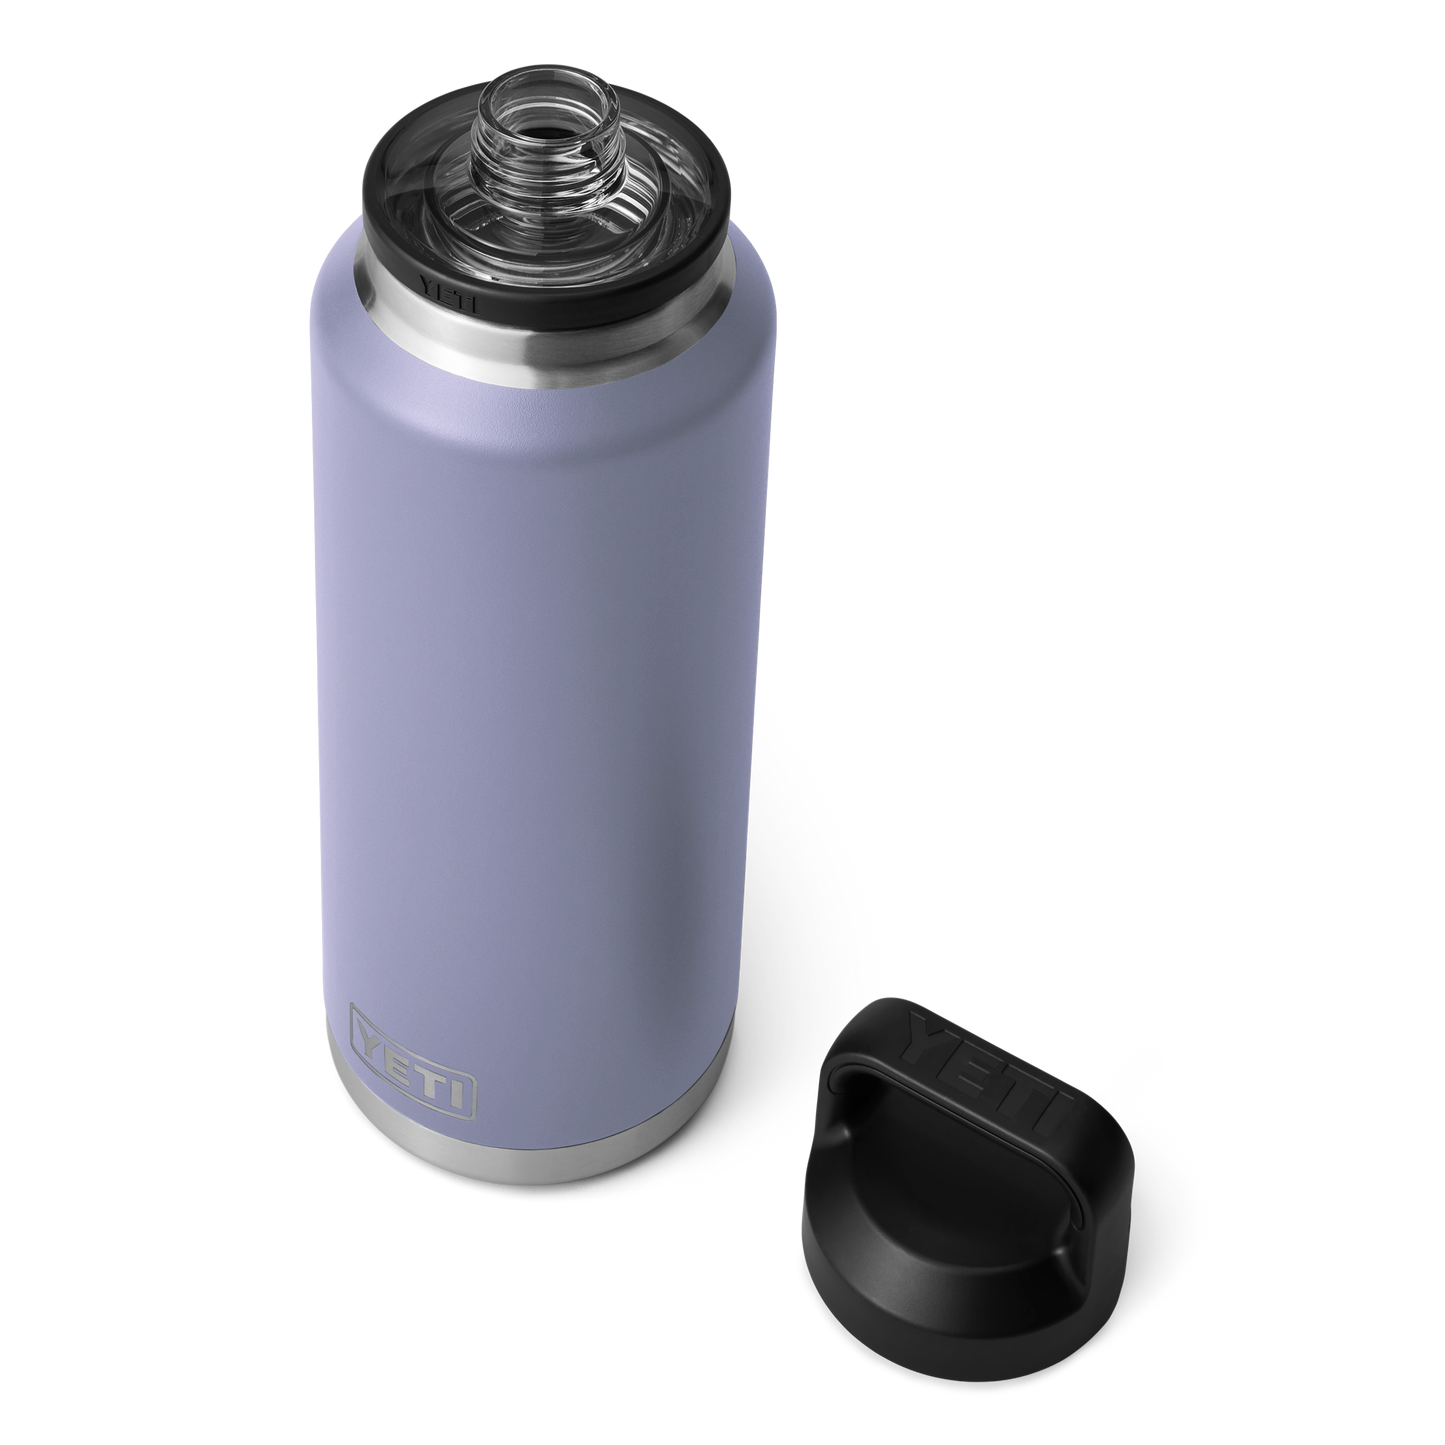 YETI Rambler® 46 oz Flasche (1,4 l) mit Chug-Verschluss Cosmic Lilac